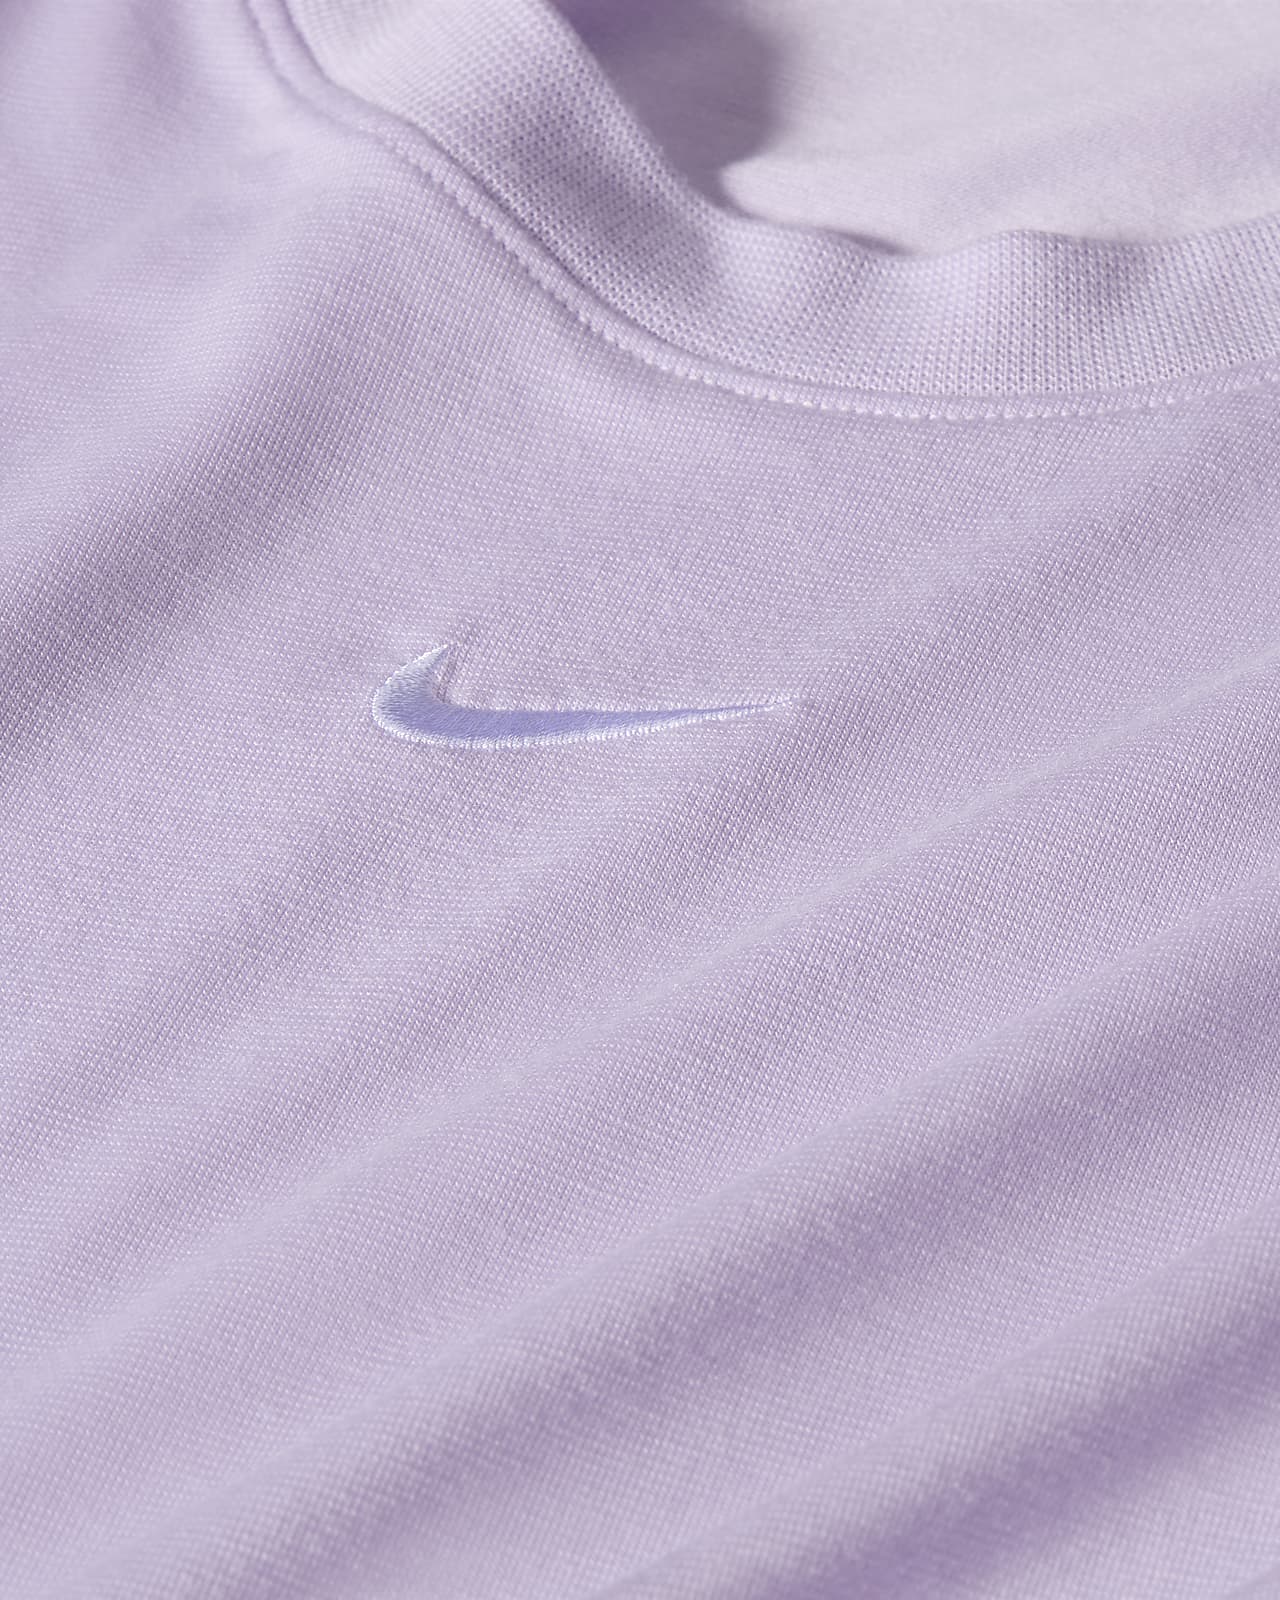 Nike Women's Sportswear Essential Cami Shirt Black Sz Large cz9294 010